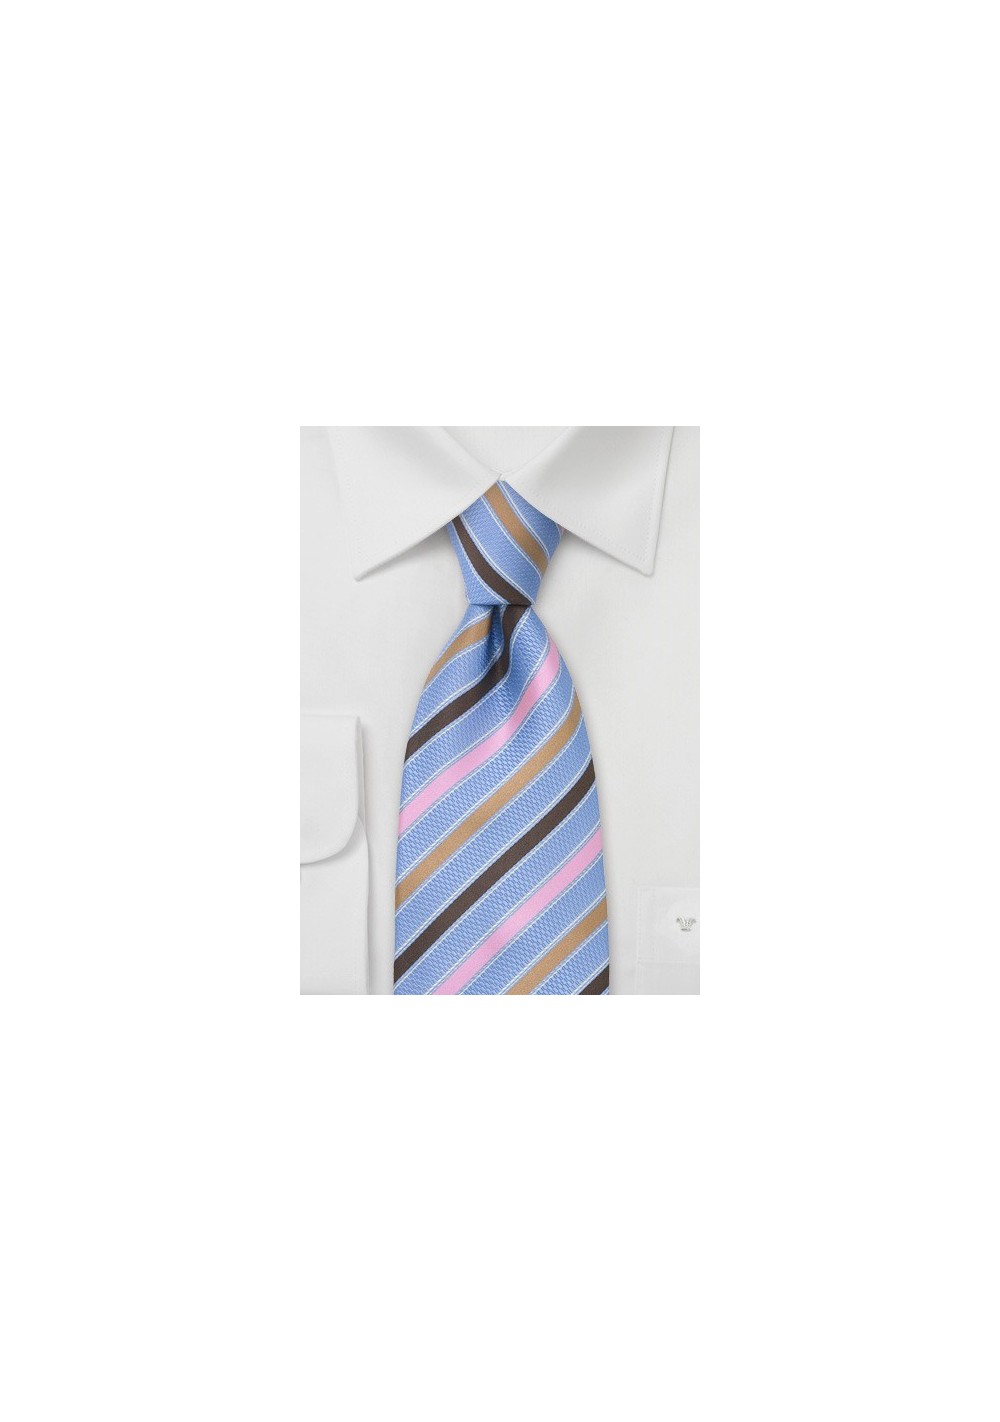 Light Blue, Pink, and Brown Striped Designer Tie